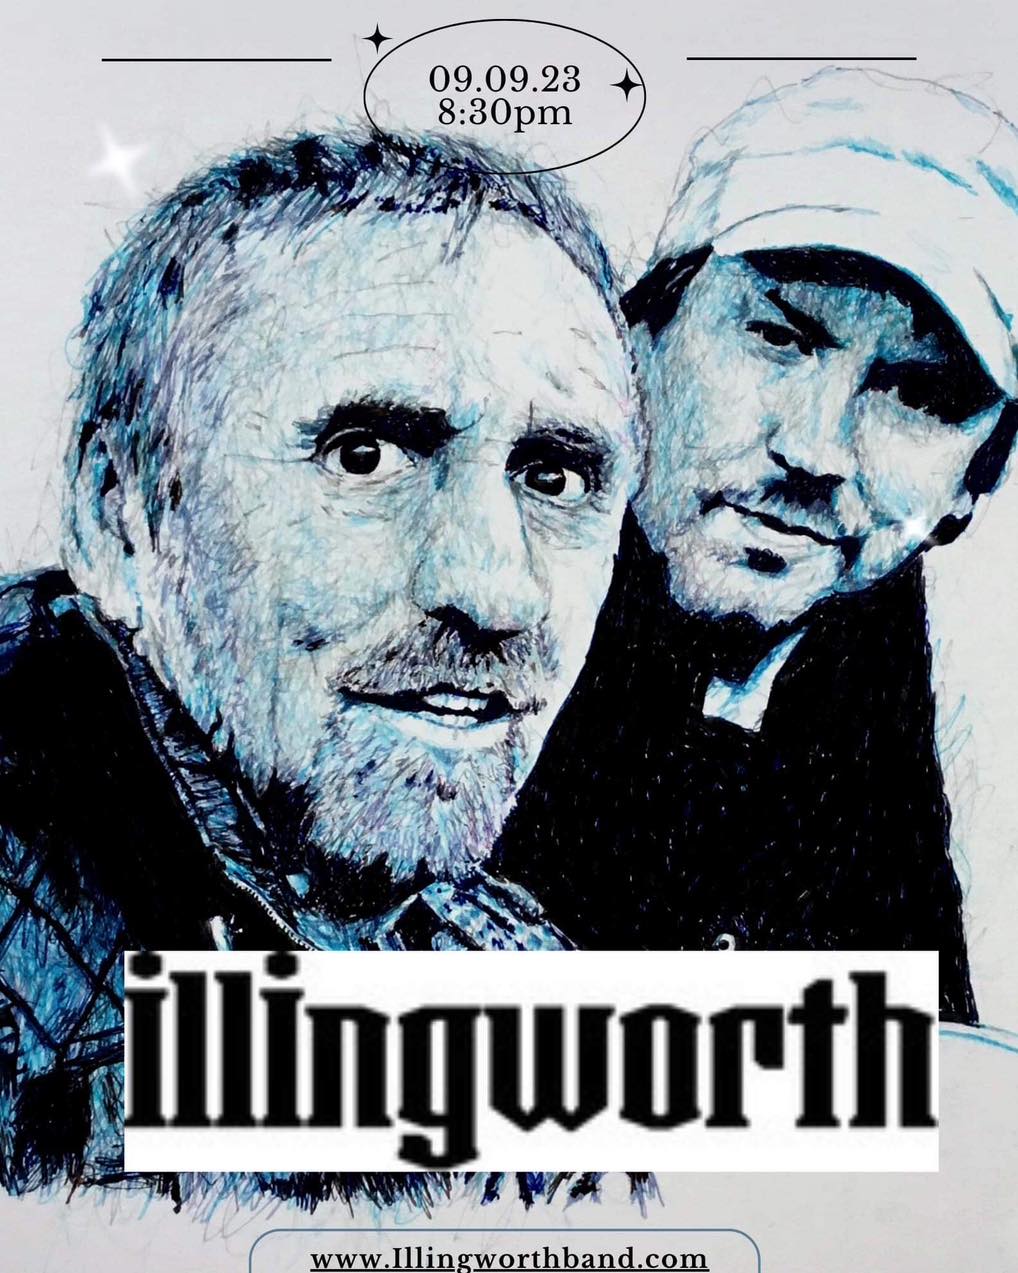 Illingworth